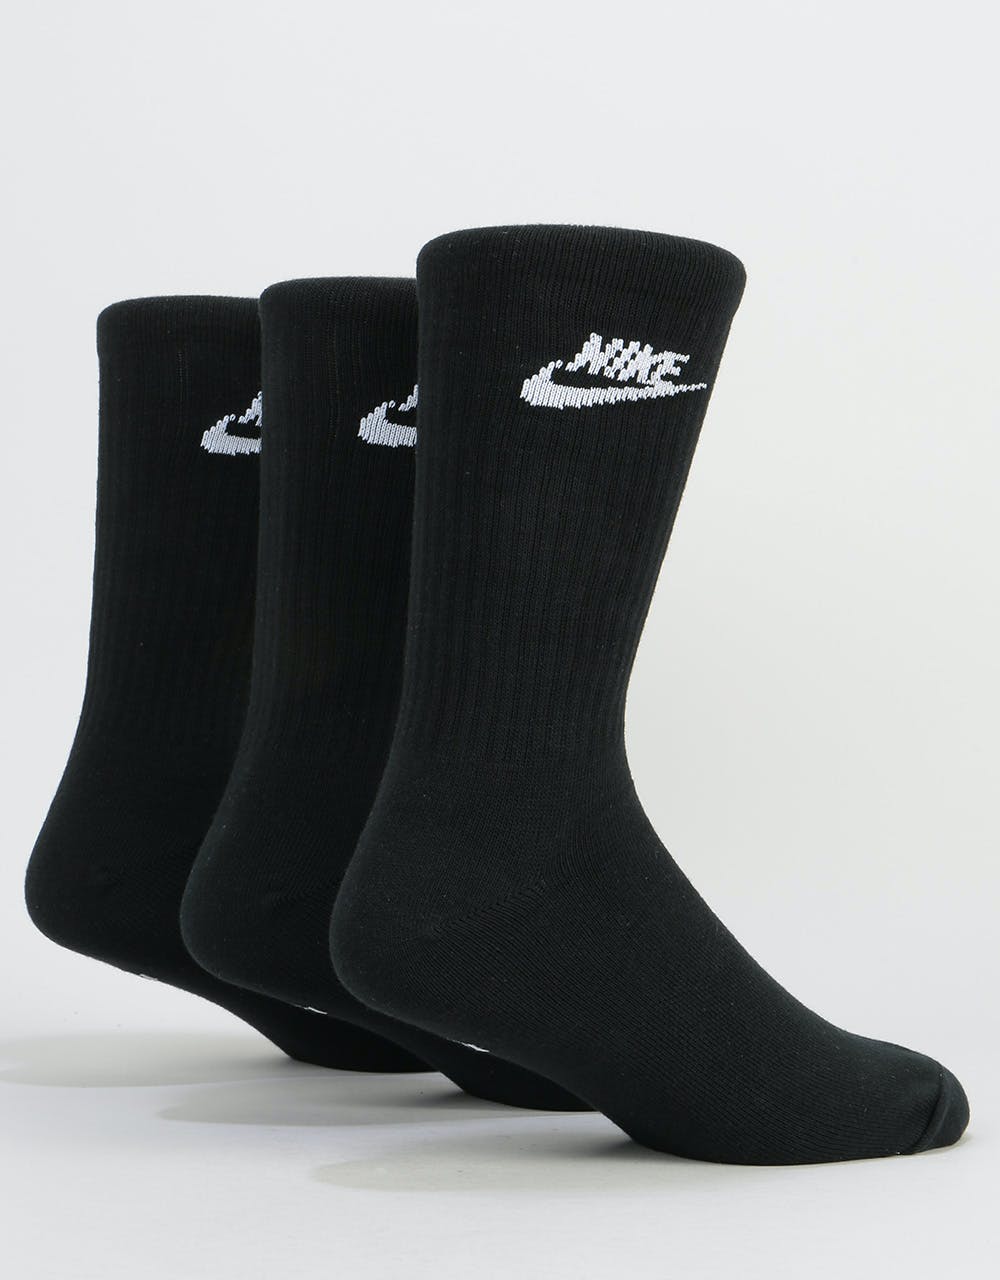 Nike SB Essential Crew Socks 3 Pack - Black/White